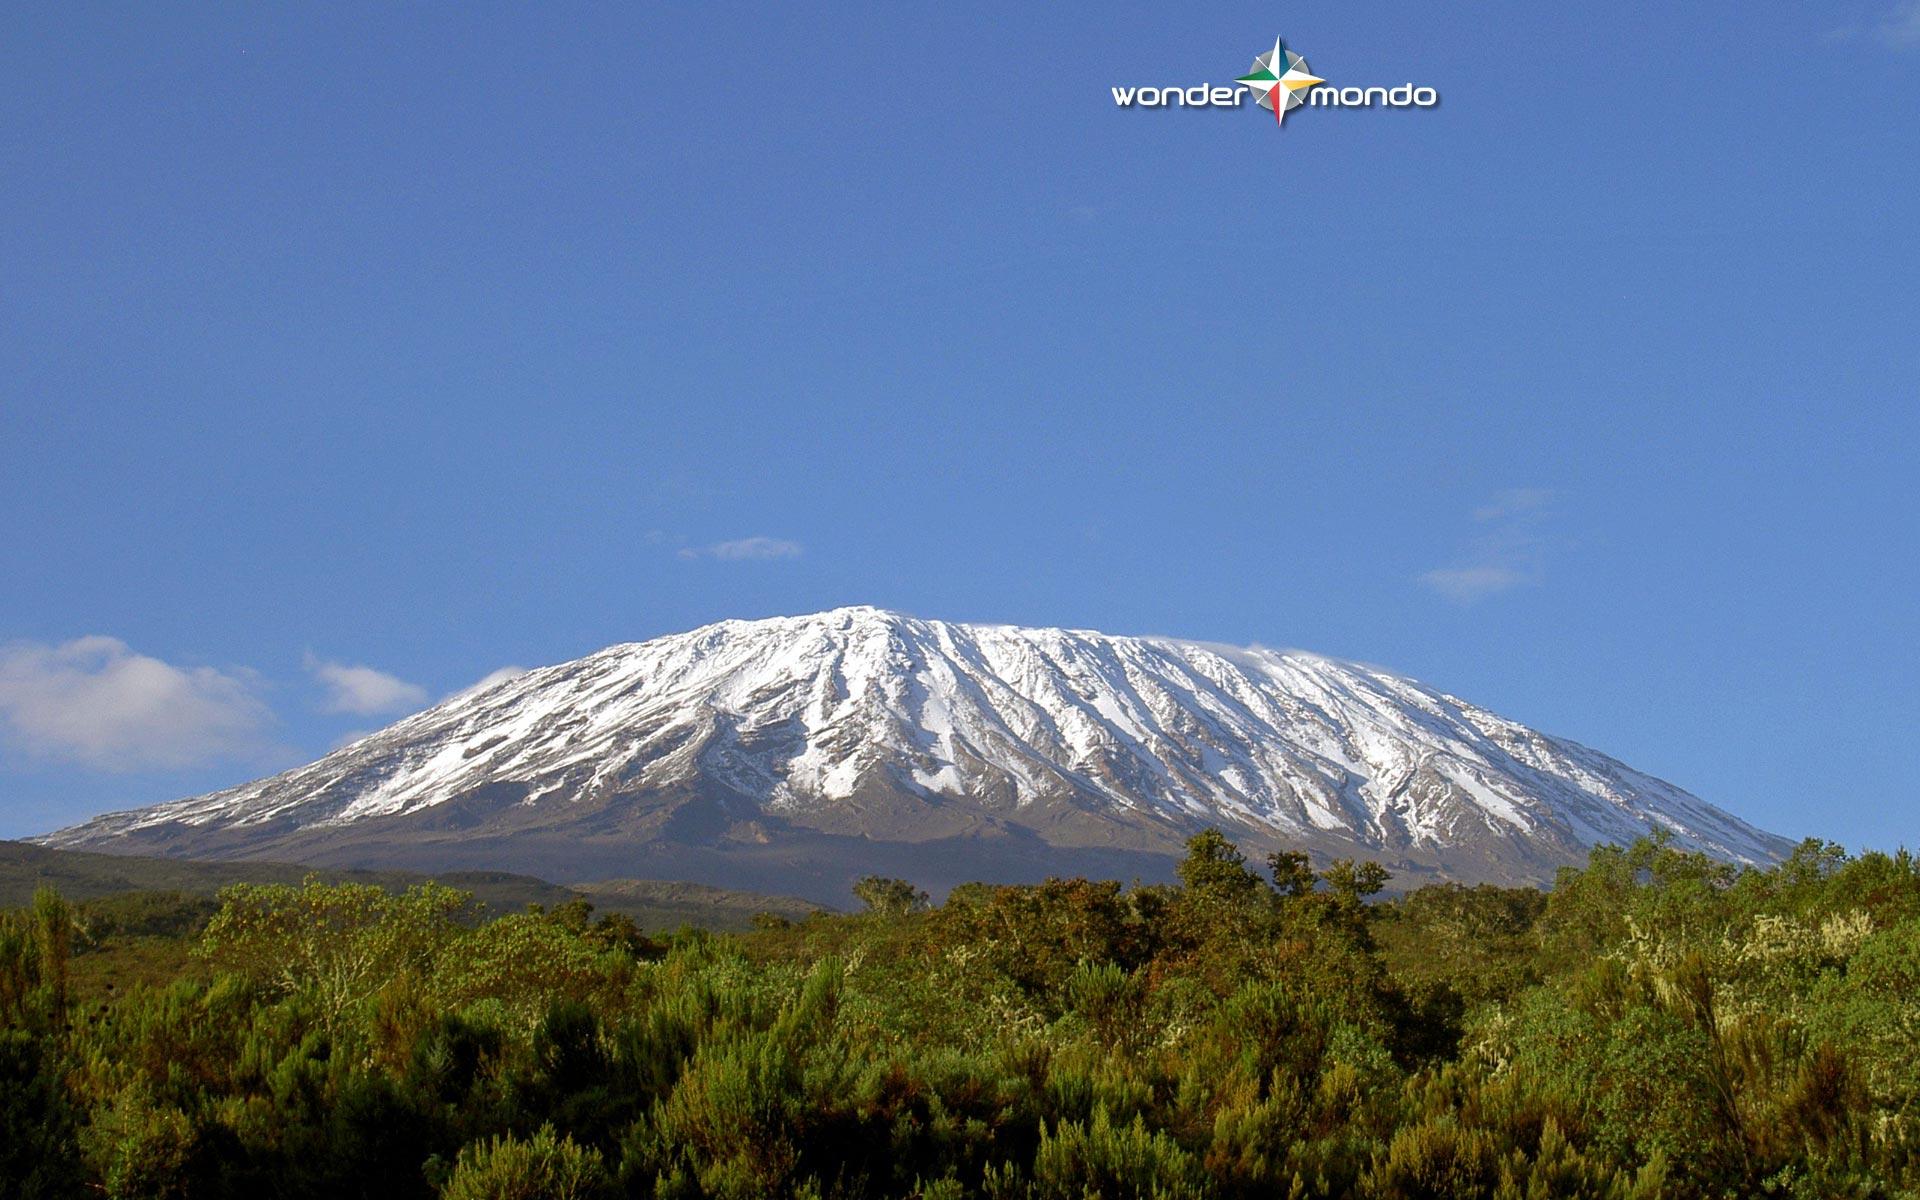 Wallpaper with Mount Kilimanjaro